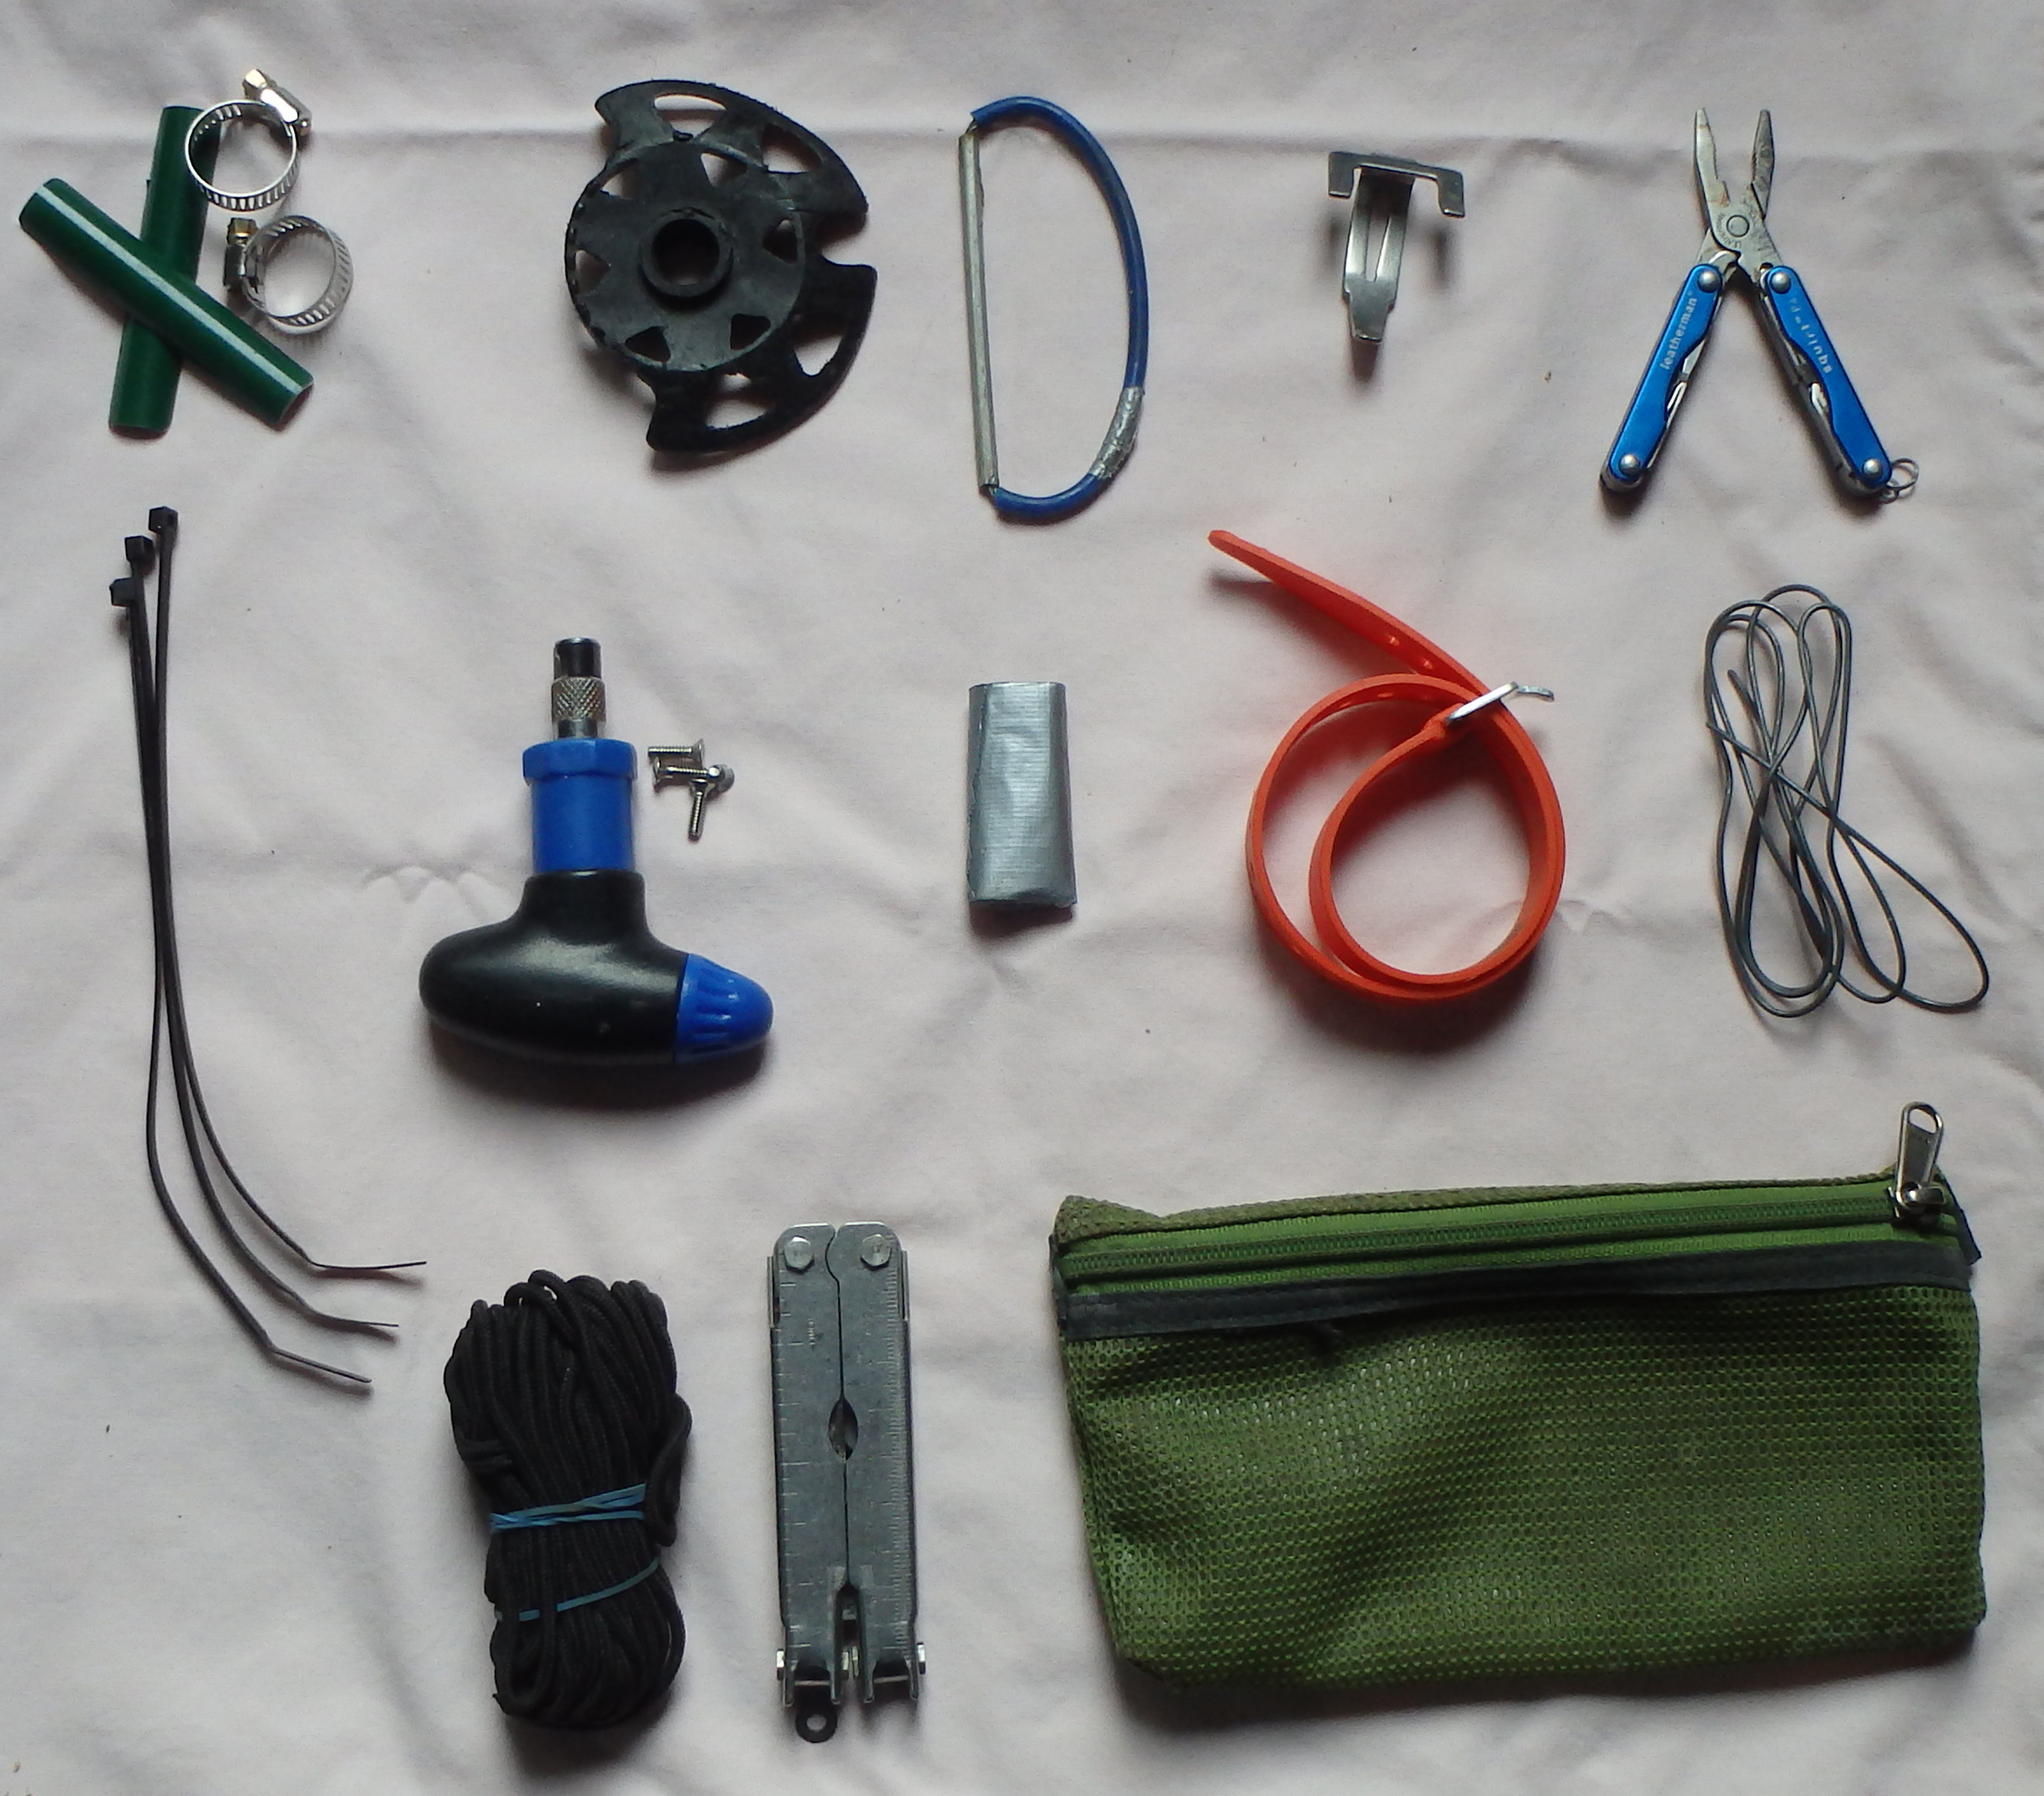 Hardest Metal Zipper Slider Repair Kit For Travel, Suitcase, And